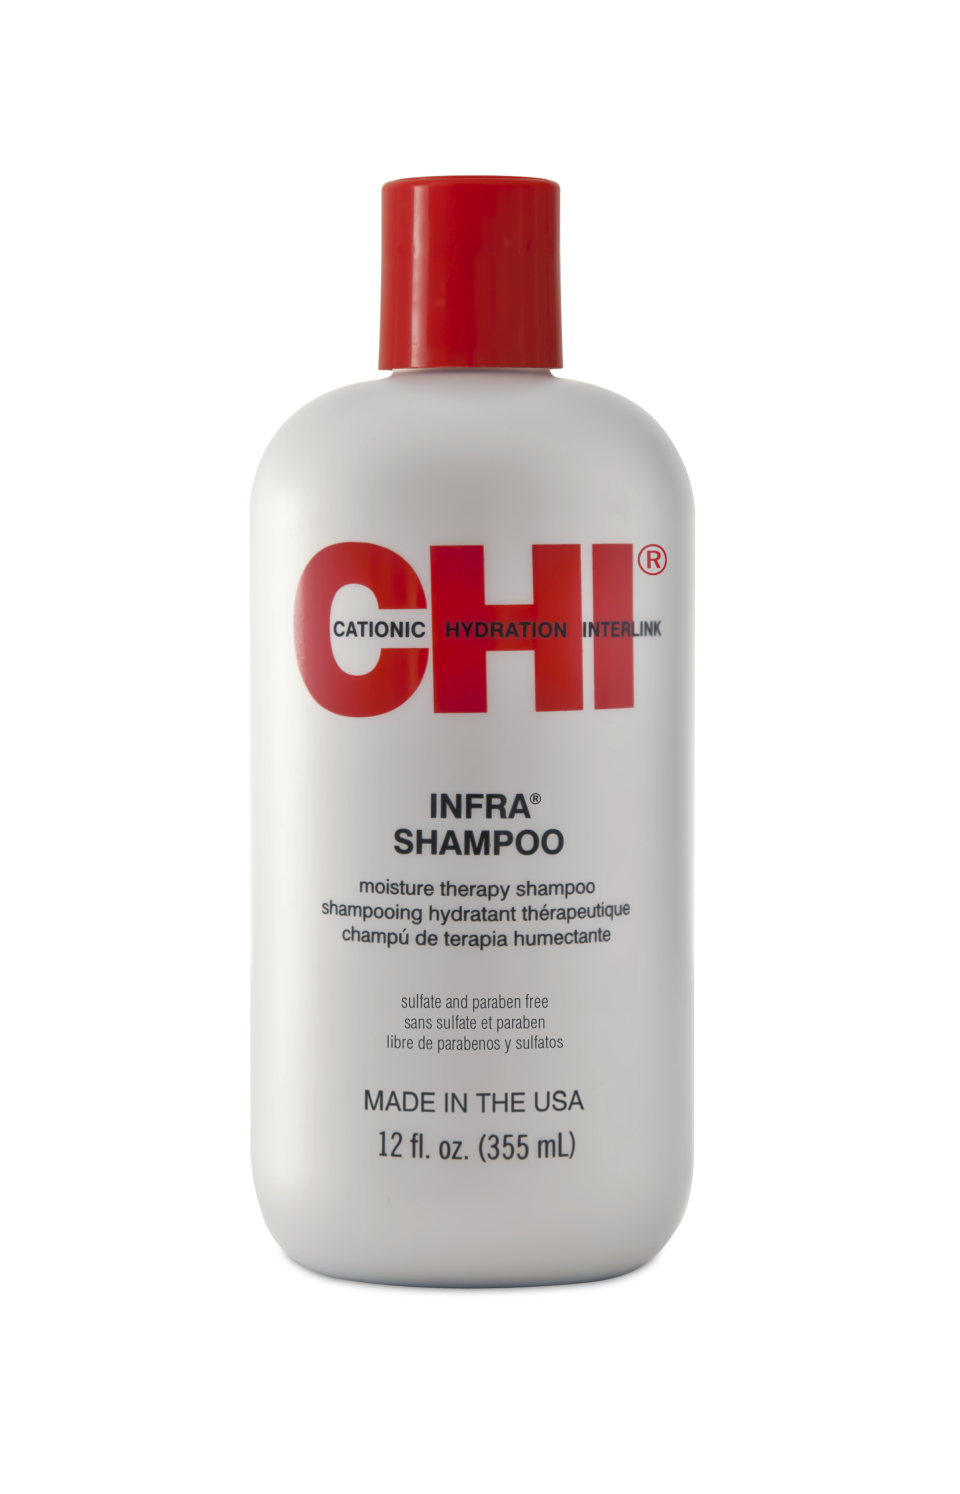 CHI Infra Shampoo, best moisturizing shampoos for dry scalp